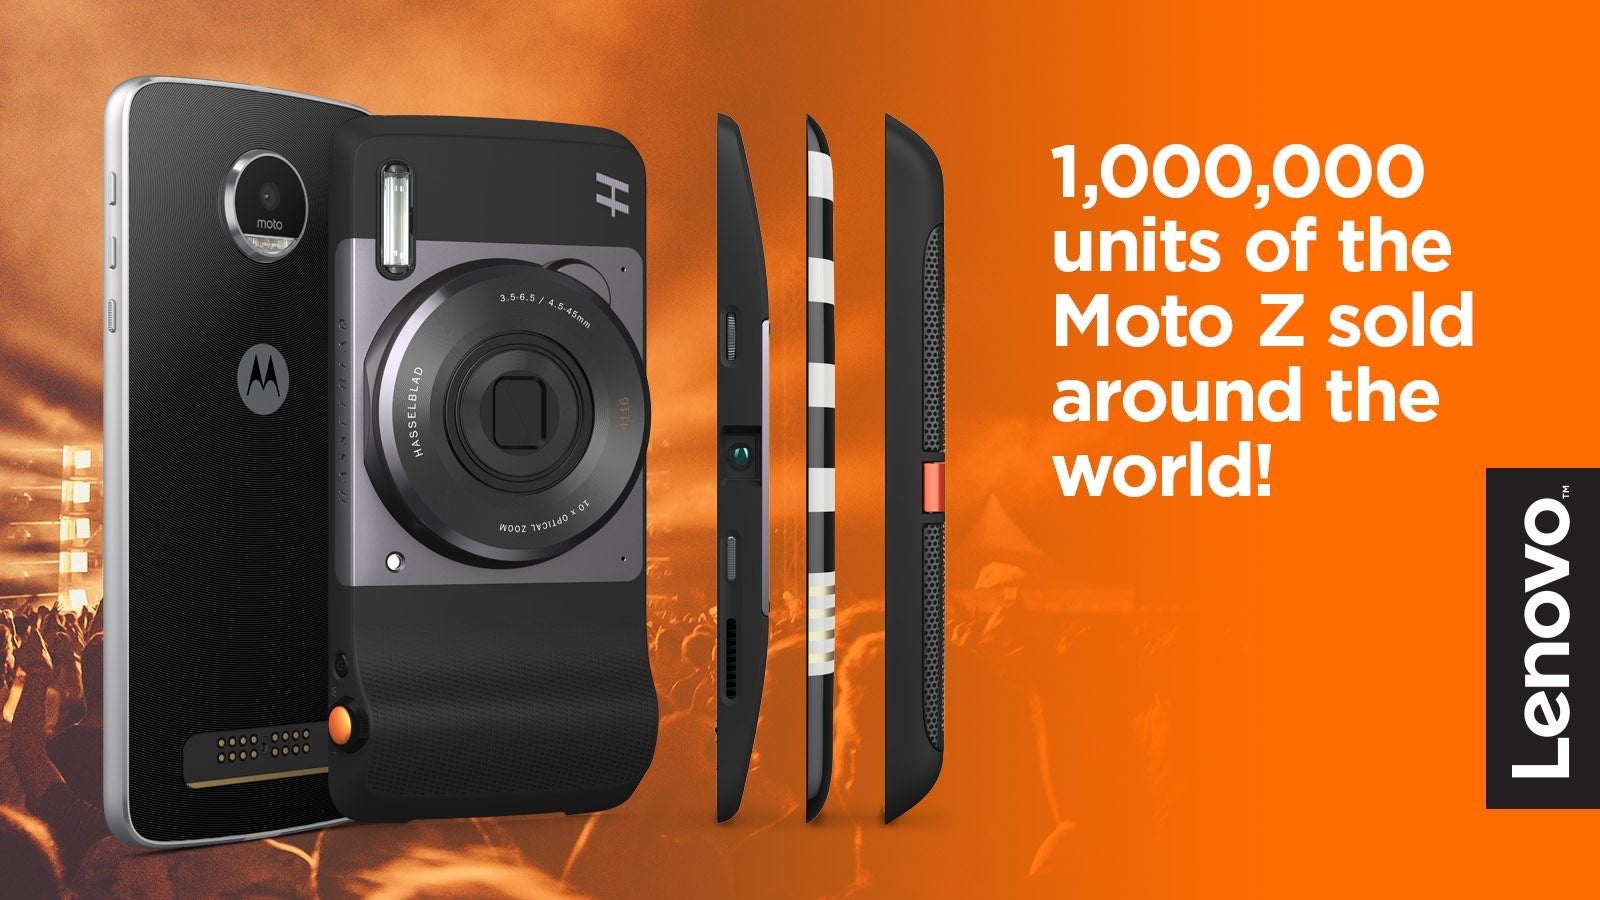 Lenovo says that it has sold 1 million units of the Motorola Moto Z line - Lenovo celebrates 1 million Motorola Moto Z units sold globally